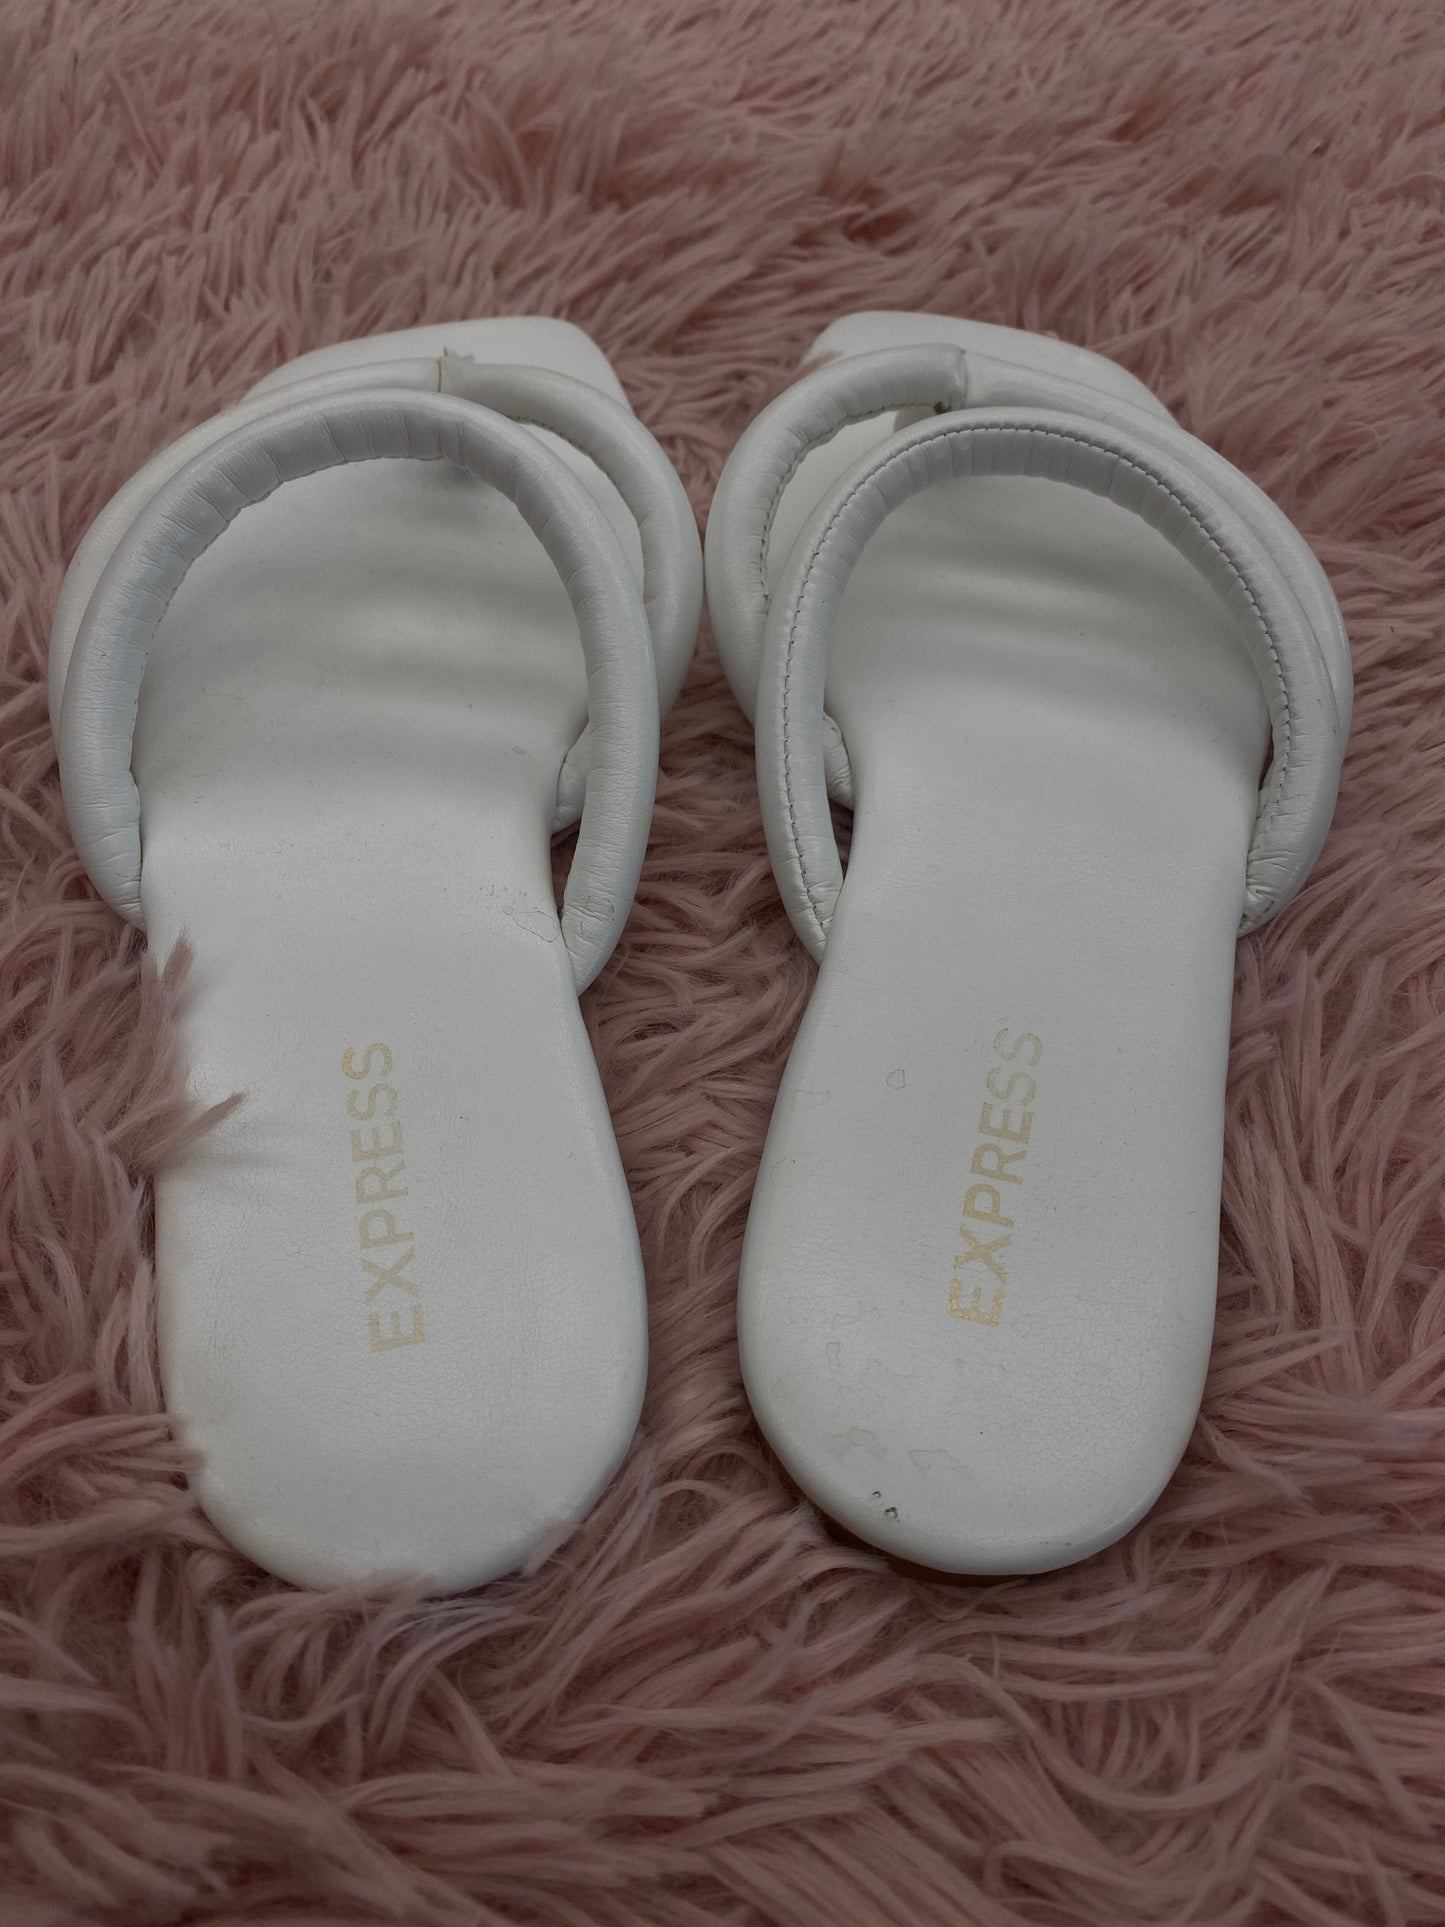 White Sandals Flip Flops Express, Size 6